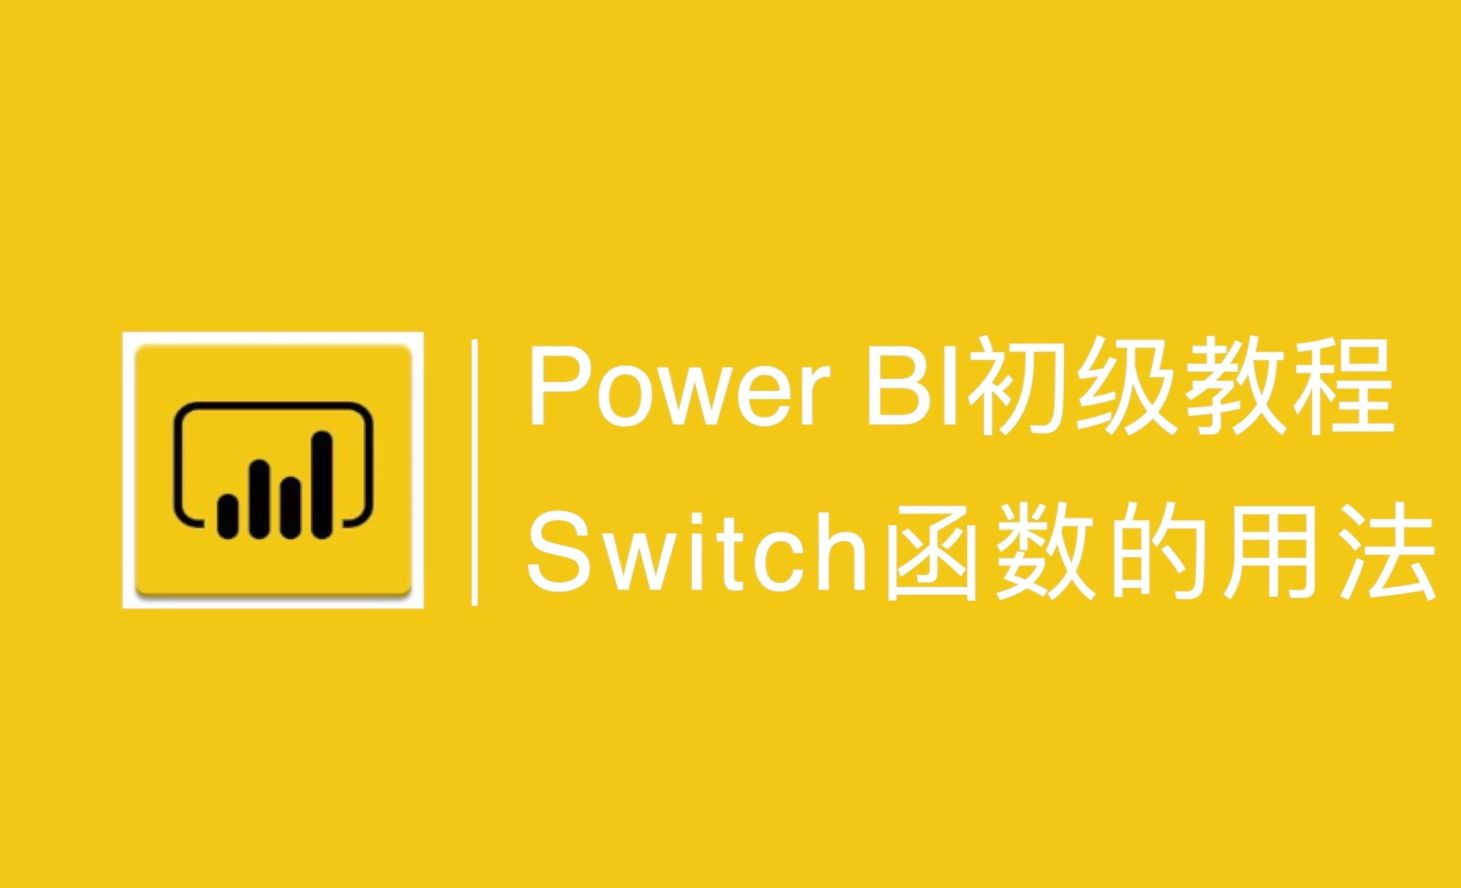 PowerBI-逻辑判断函数switch的用法